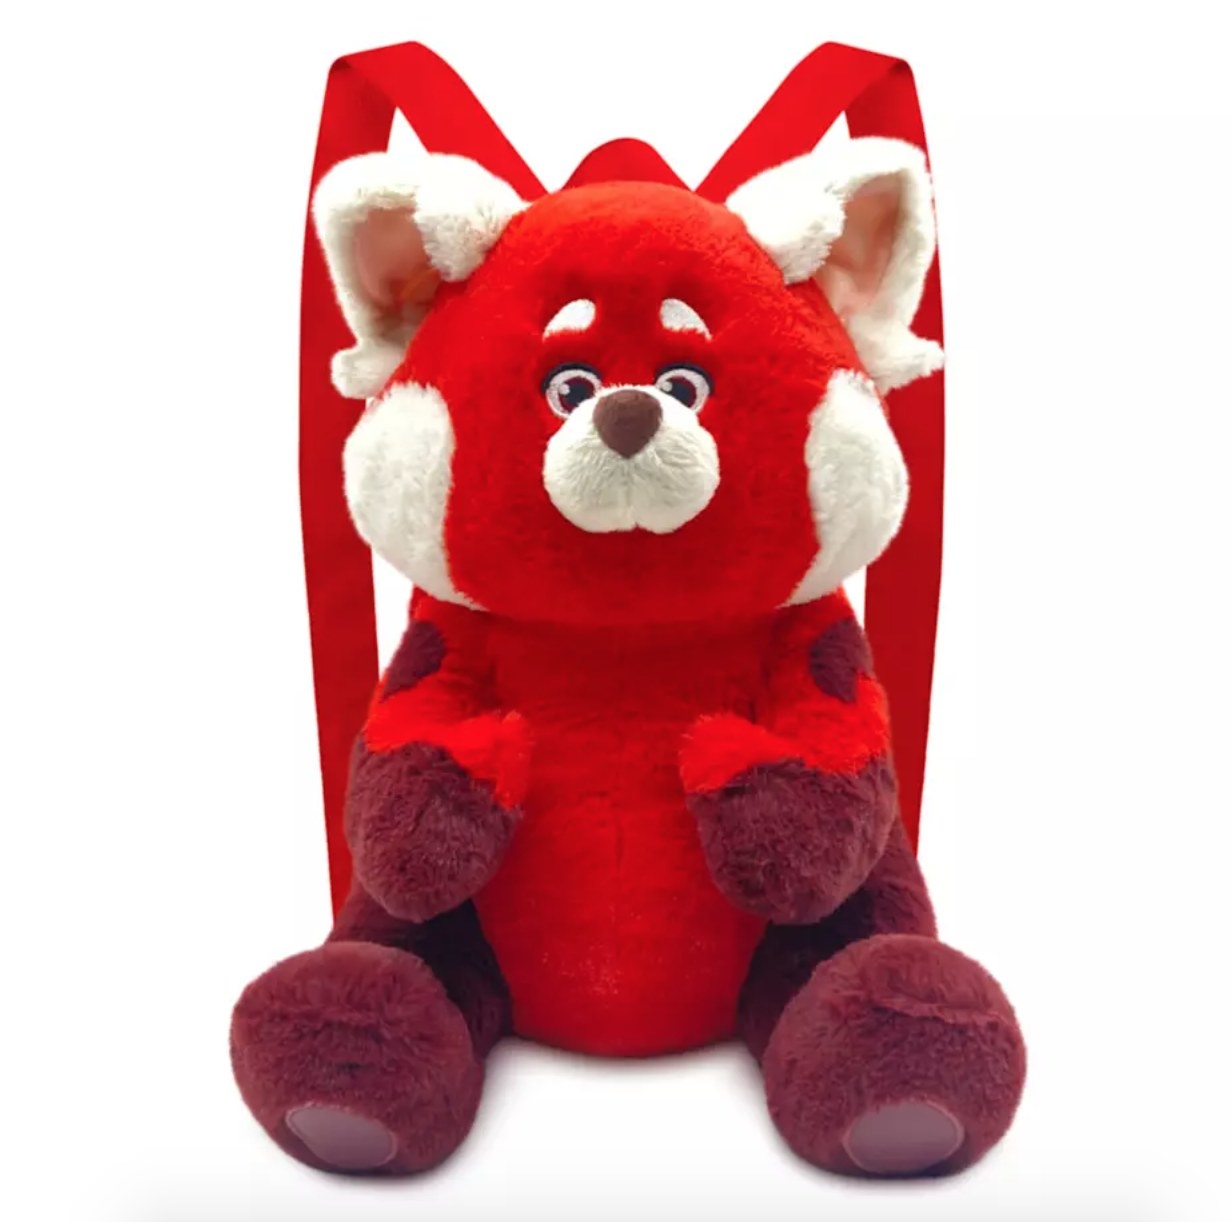 the red plush Mei panda backpack